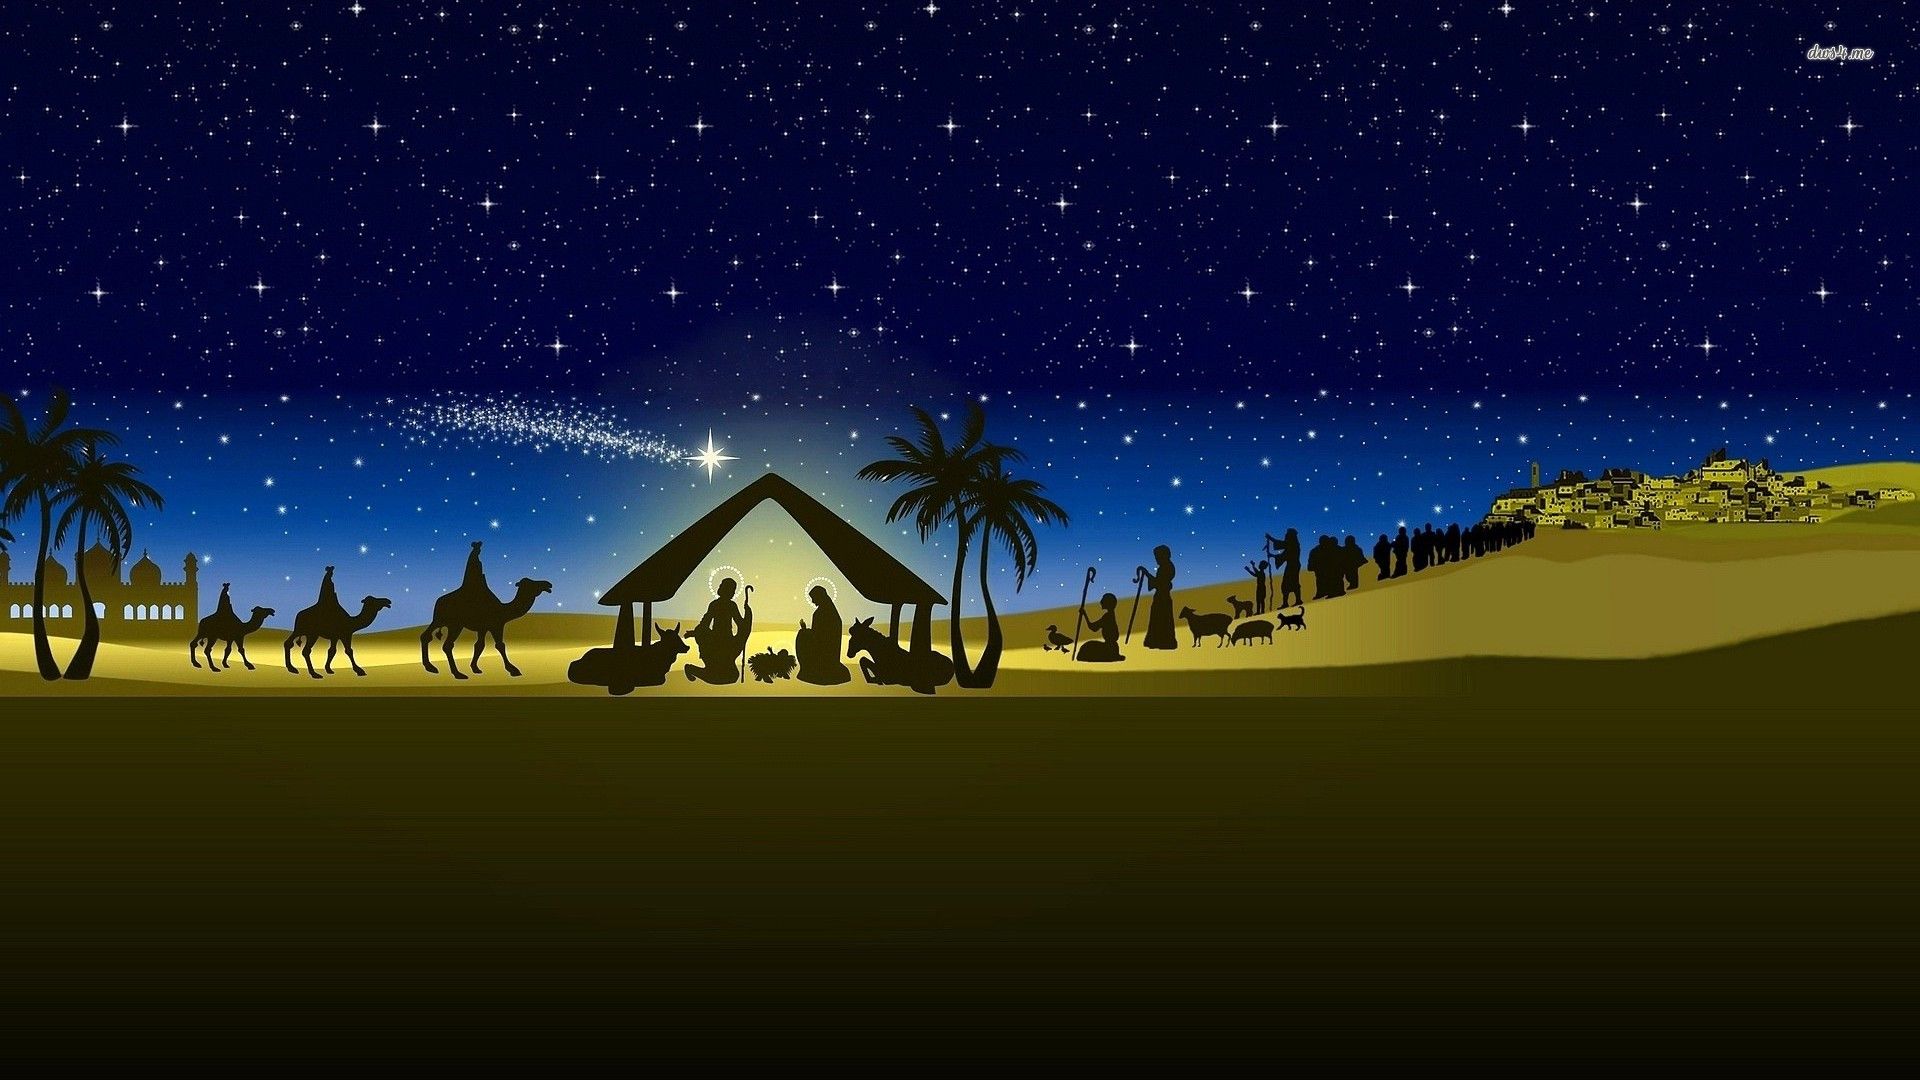 Christian Christmas Nativity Wallpaper Top